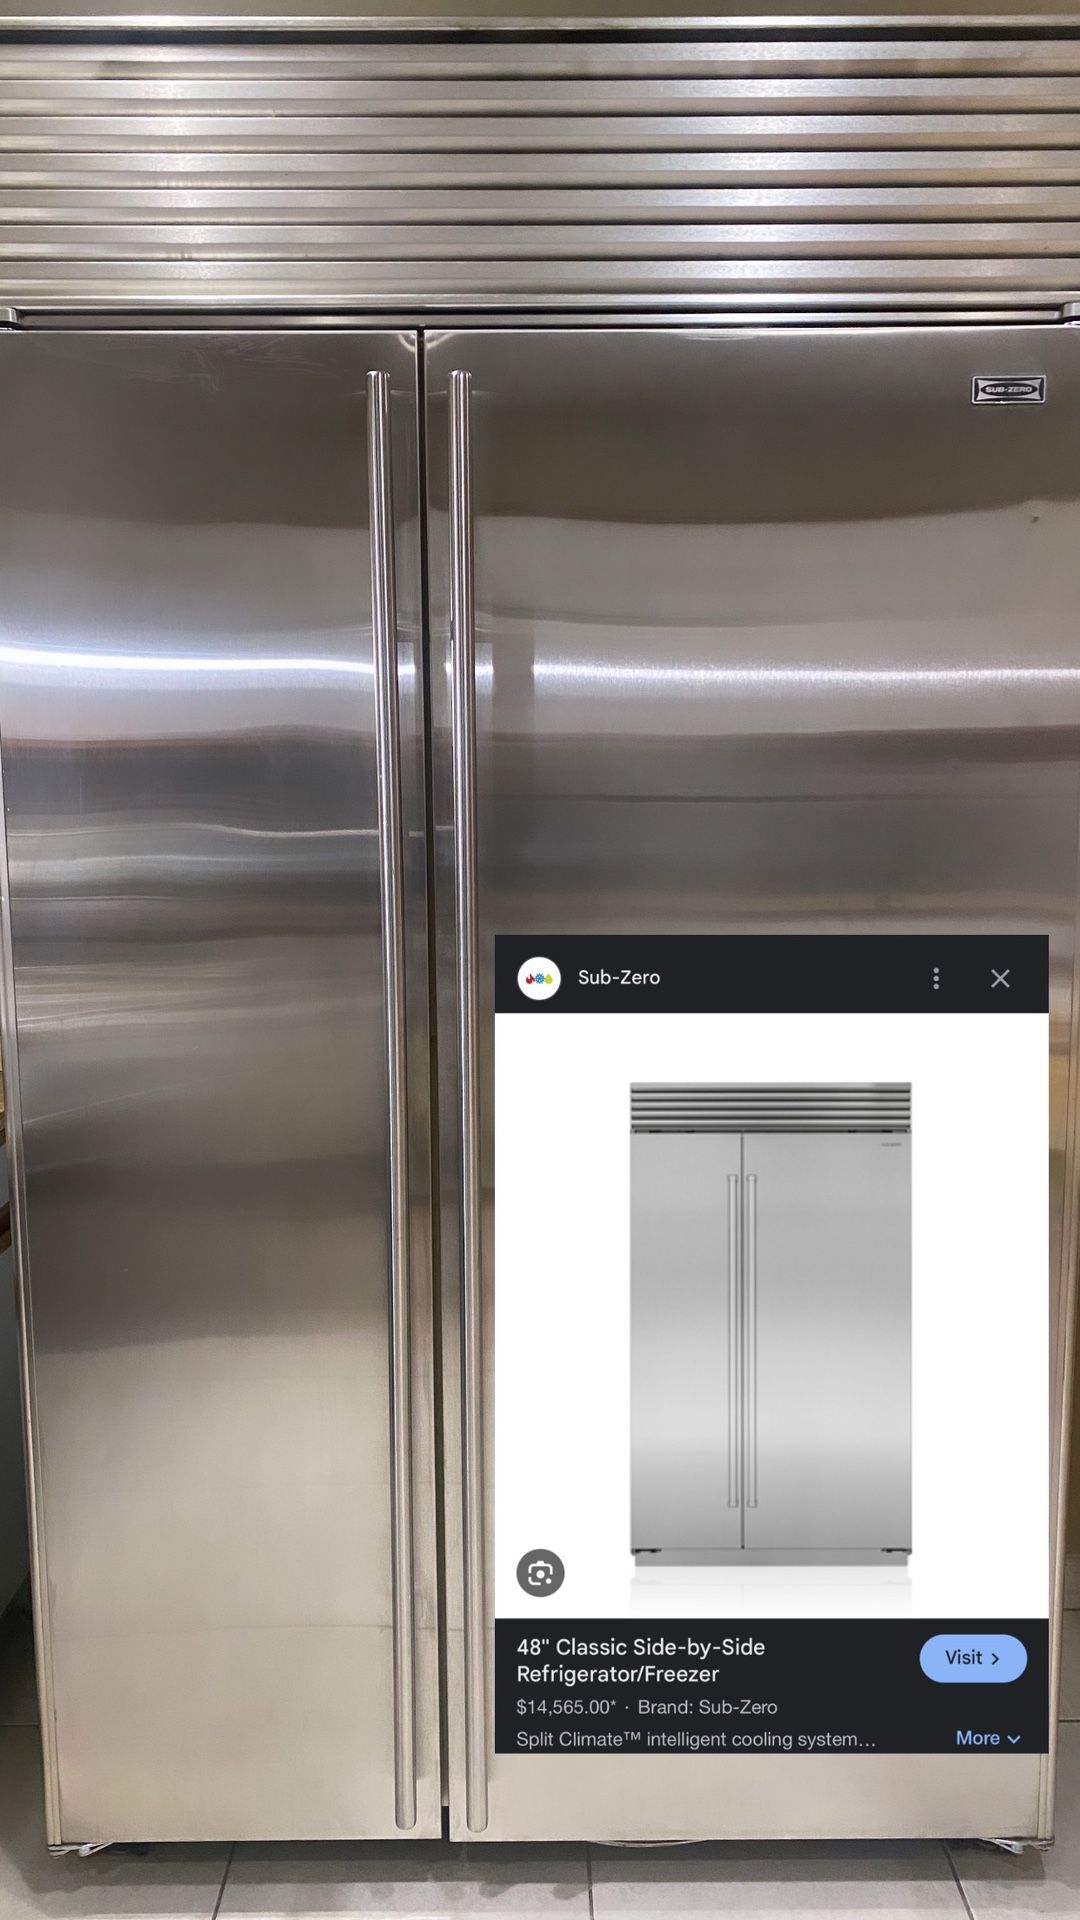 Sub-Zero 48" Refrigerator/Freezer with Internal Dispenser 